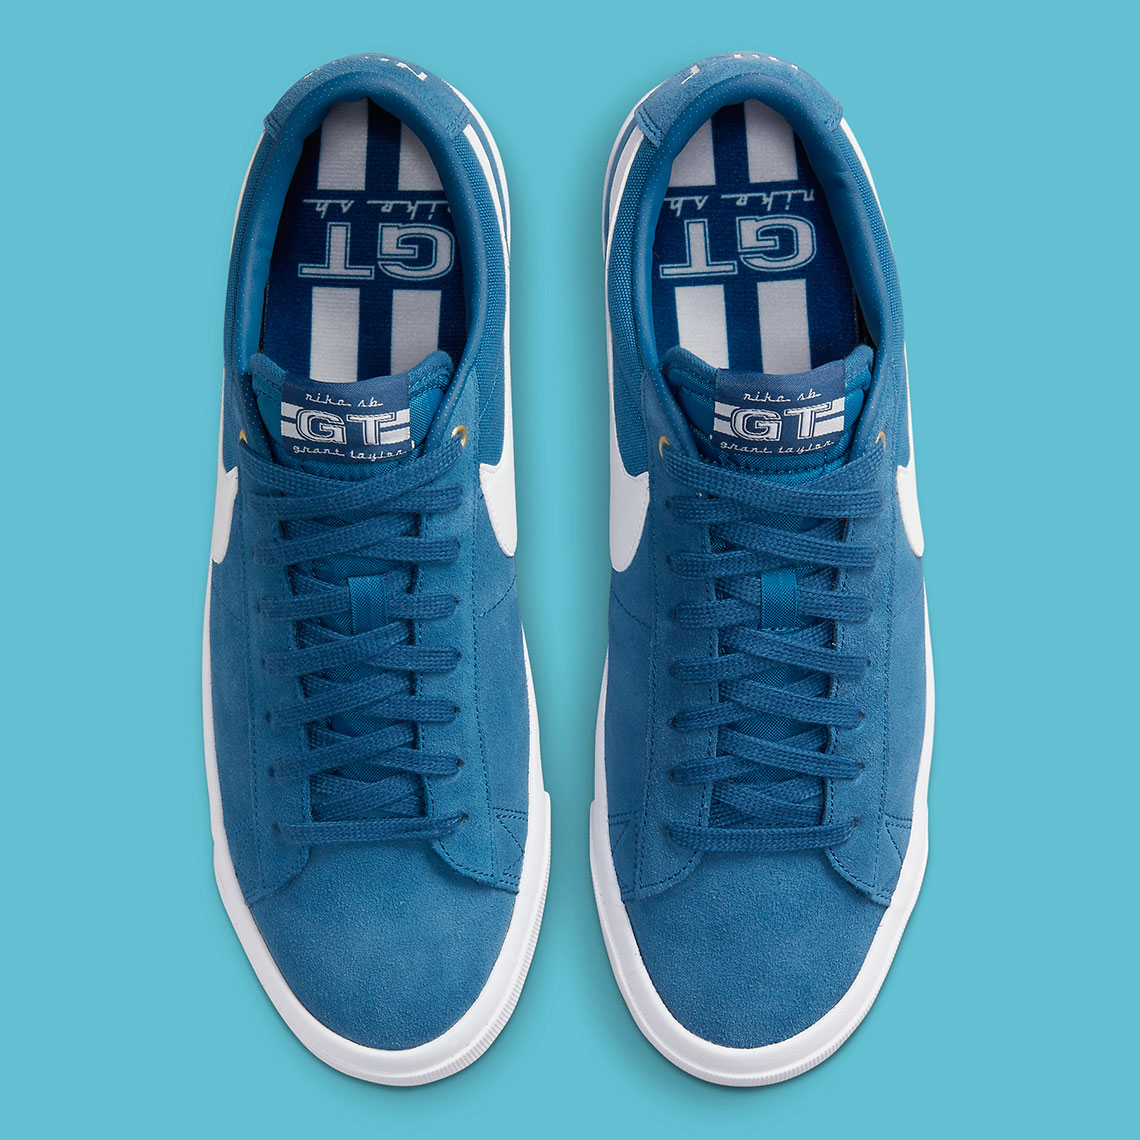 Nike Sb Blazer Low Gt Blue White Dc7695 401 2